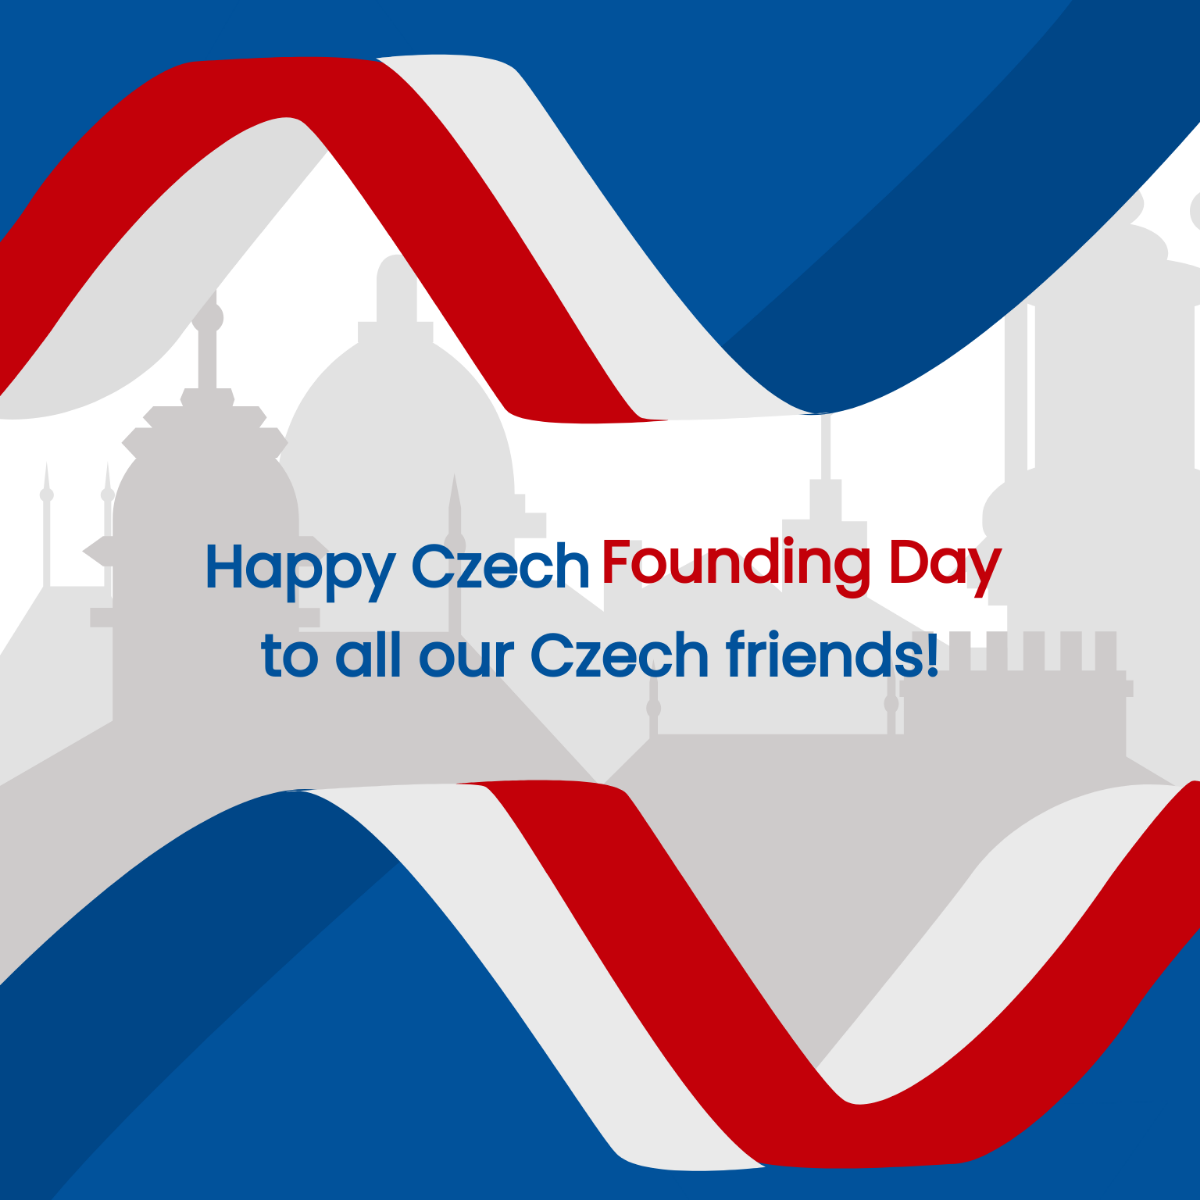 Czech Founding Day Greeting Card Vector